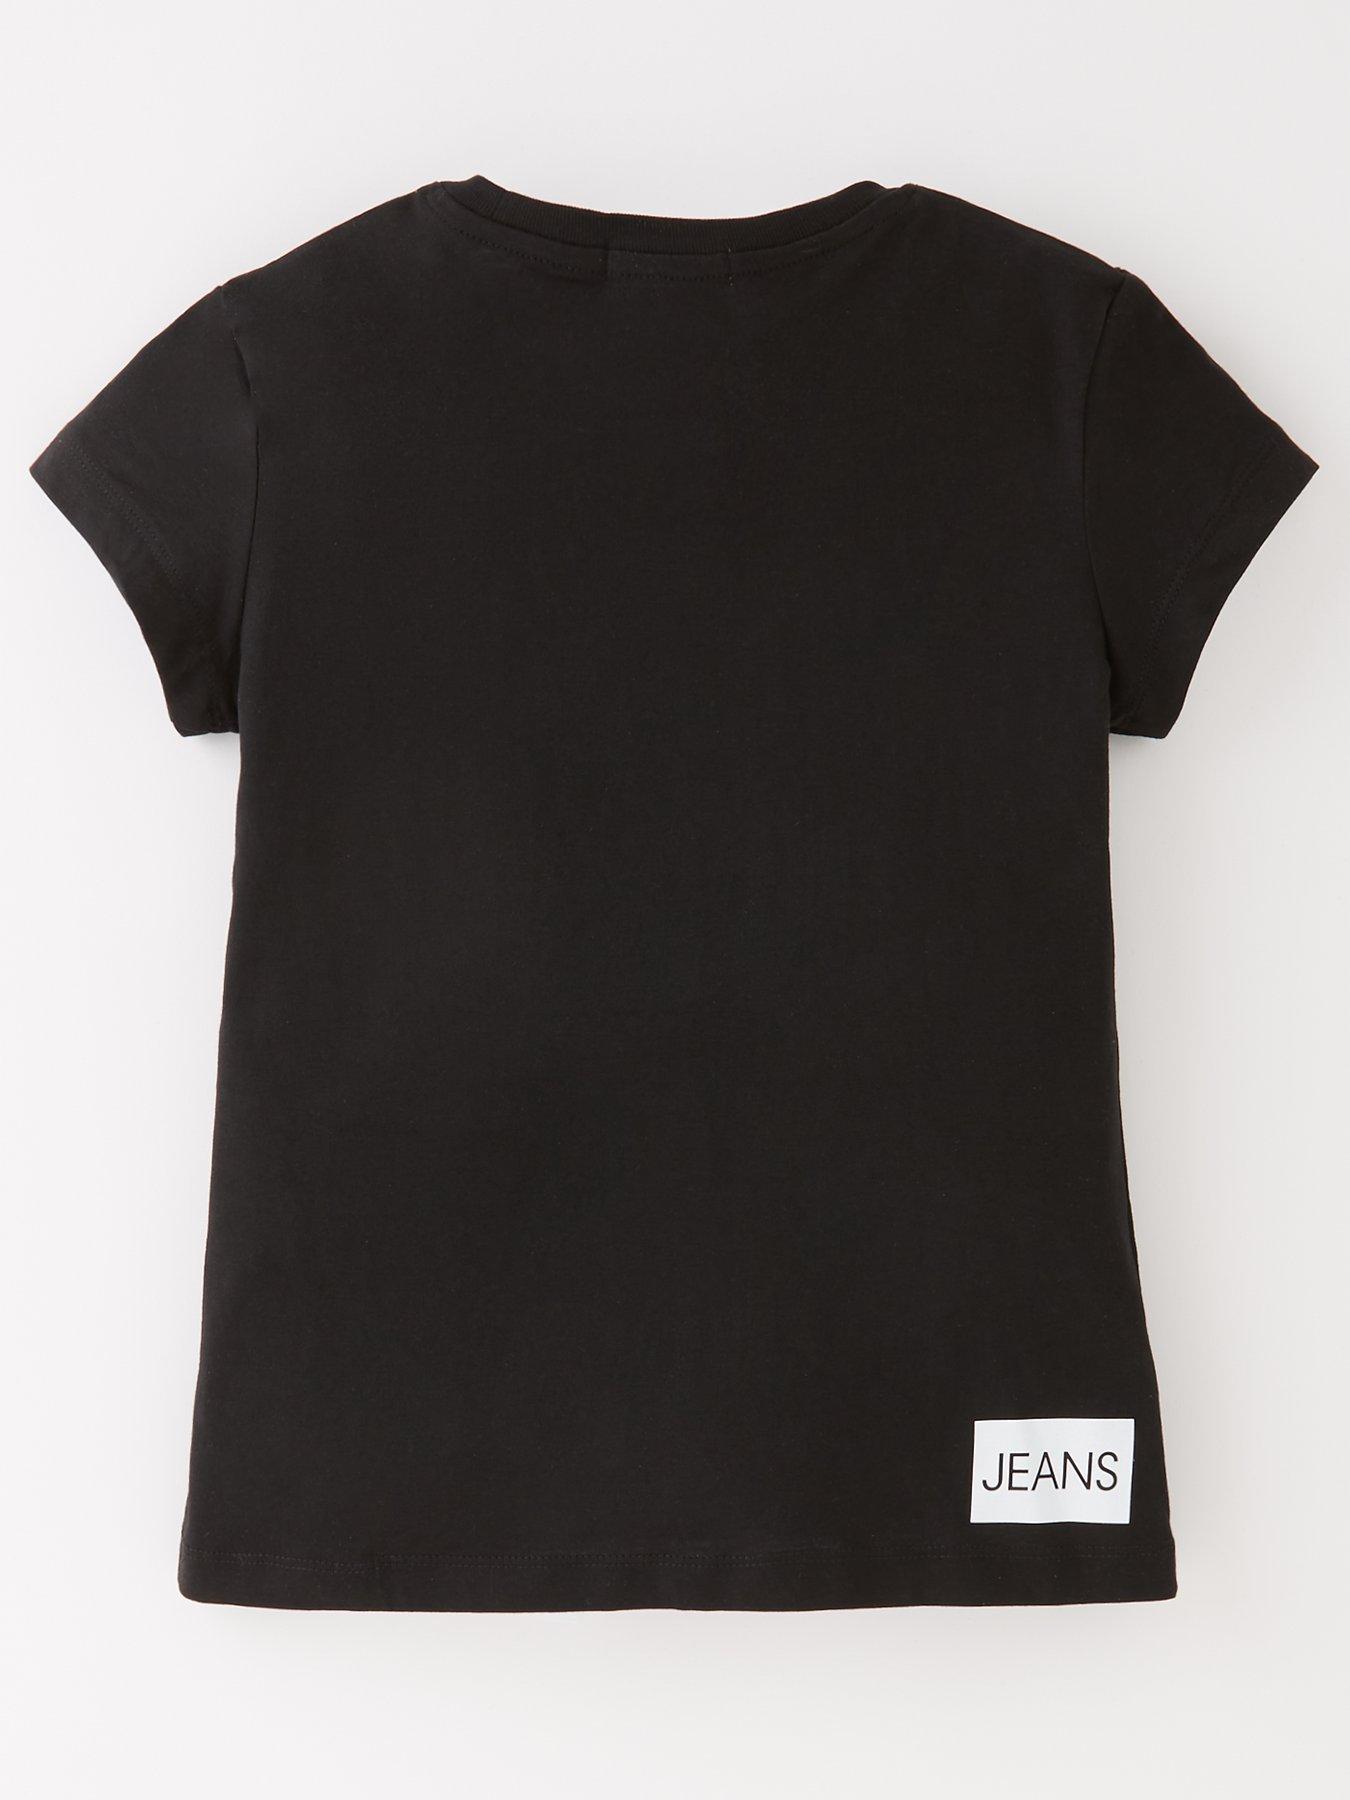 Calvin Klein Jeans institutional logo slim fit t-shirt in black